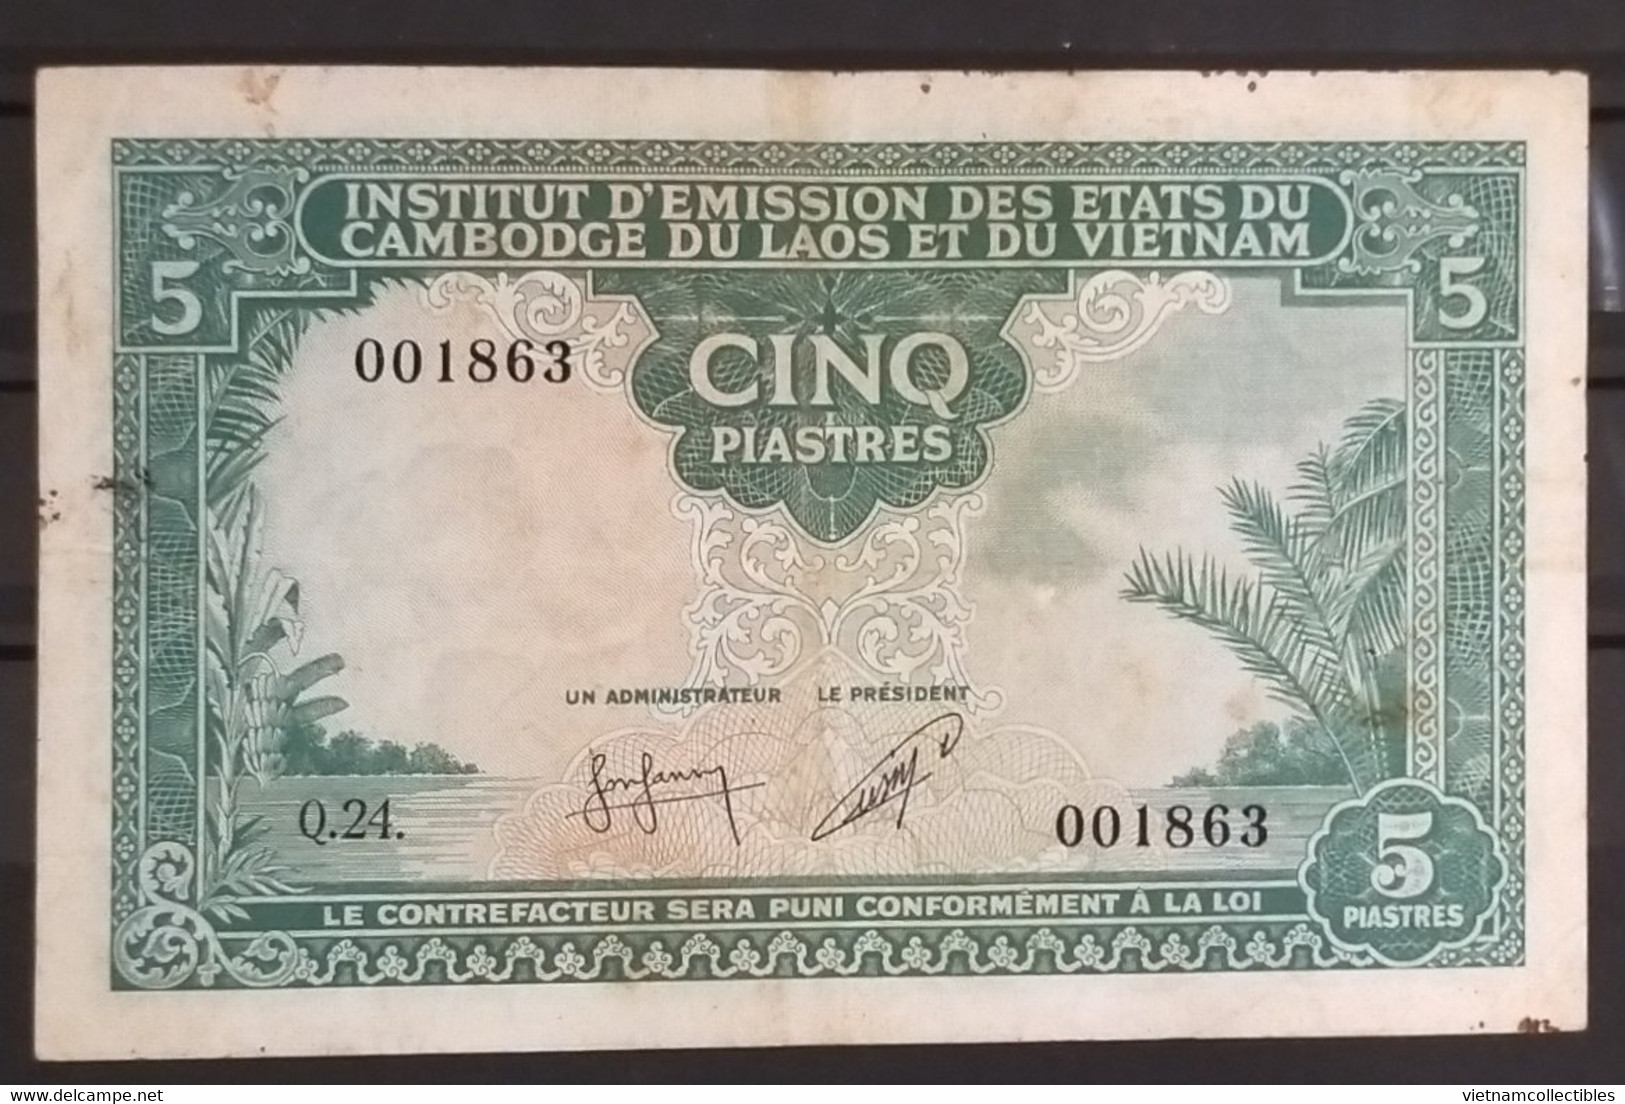 Indochina Indochine Vietnam Viet Nam Laos Cambodia 5 Piastres VF Banknote Note / Billet 1953 - Pick # 95 / 02 Photo - Indochina